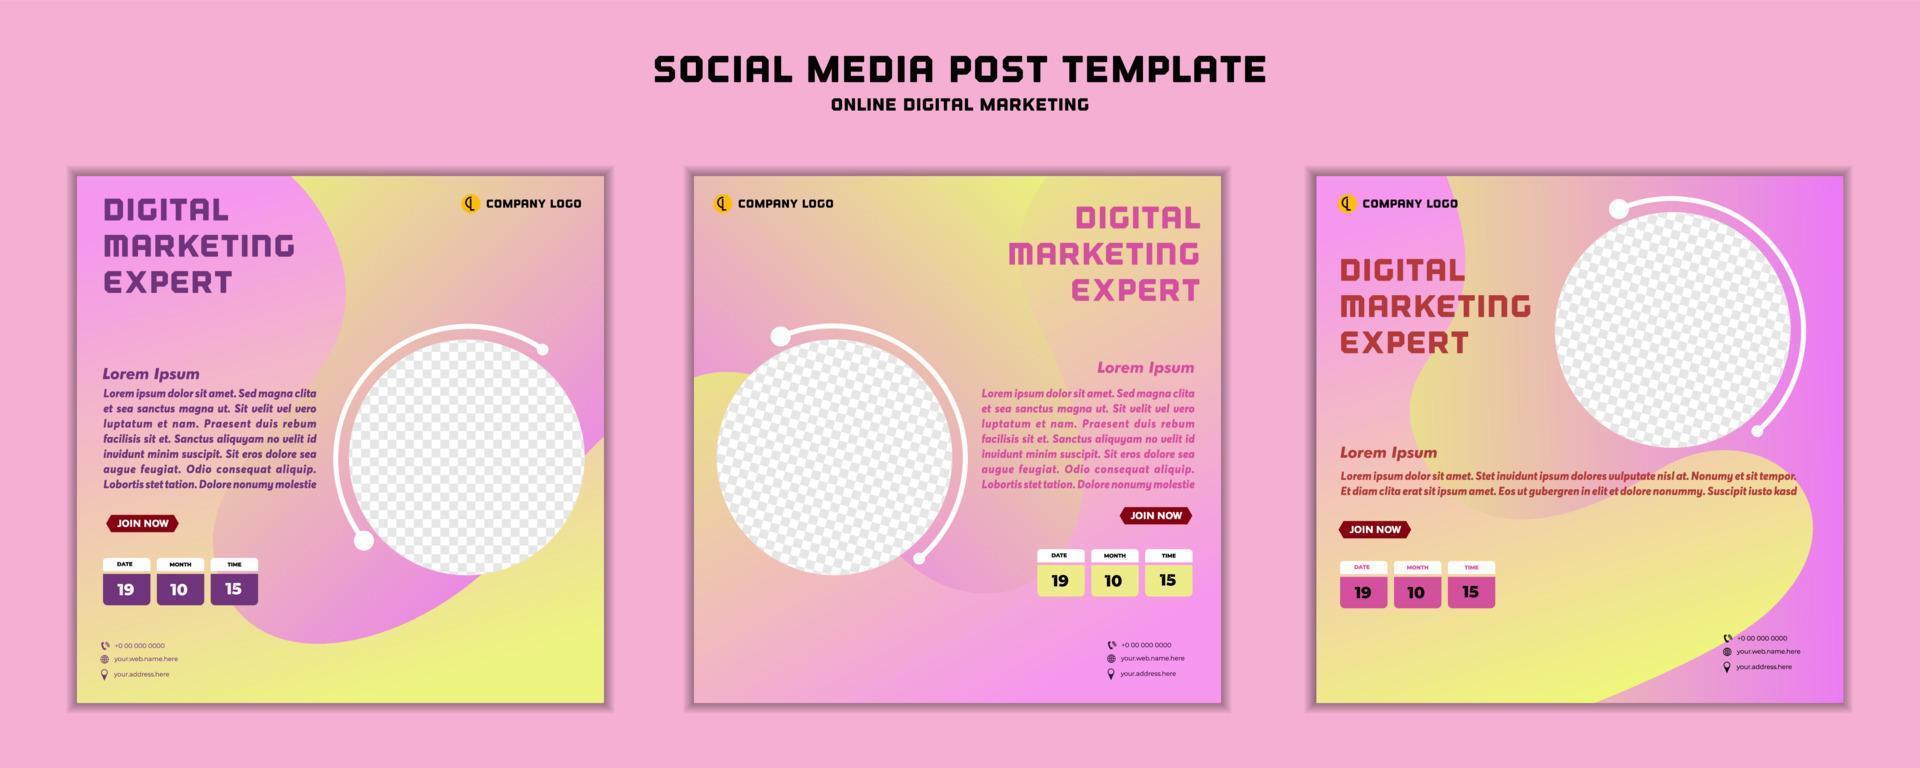 Social media post template feminine modern design , for digital marketing online or poster marketing template vector